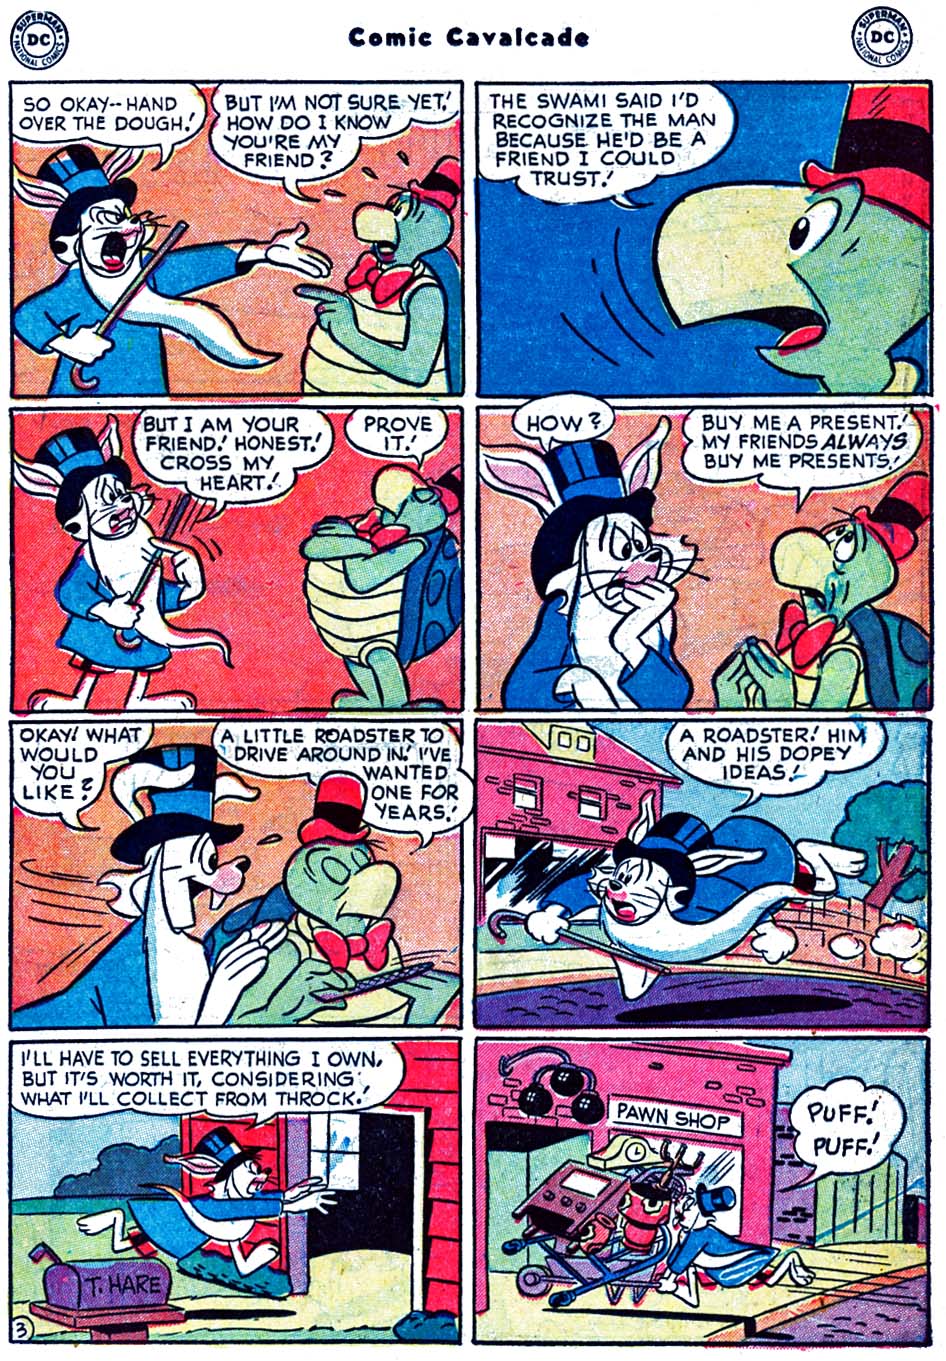 Comic Cavalcade issue 55 - Page 29